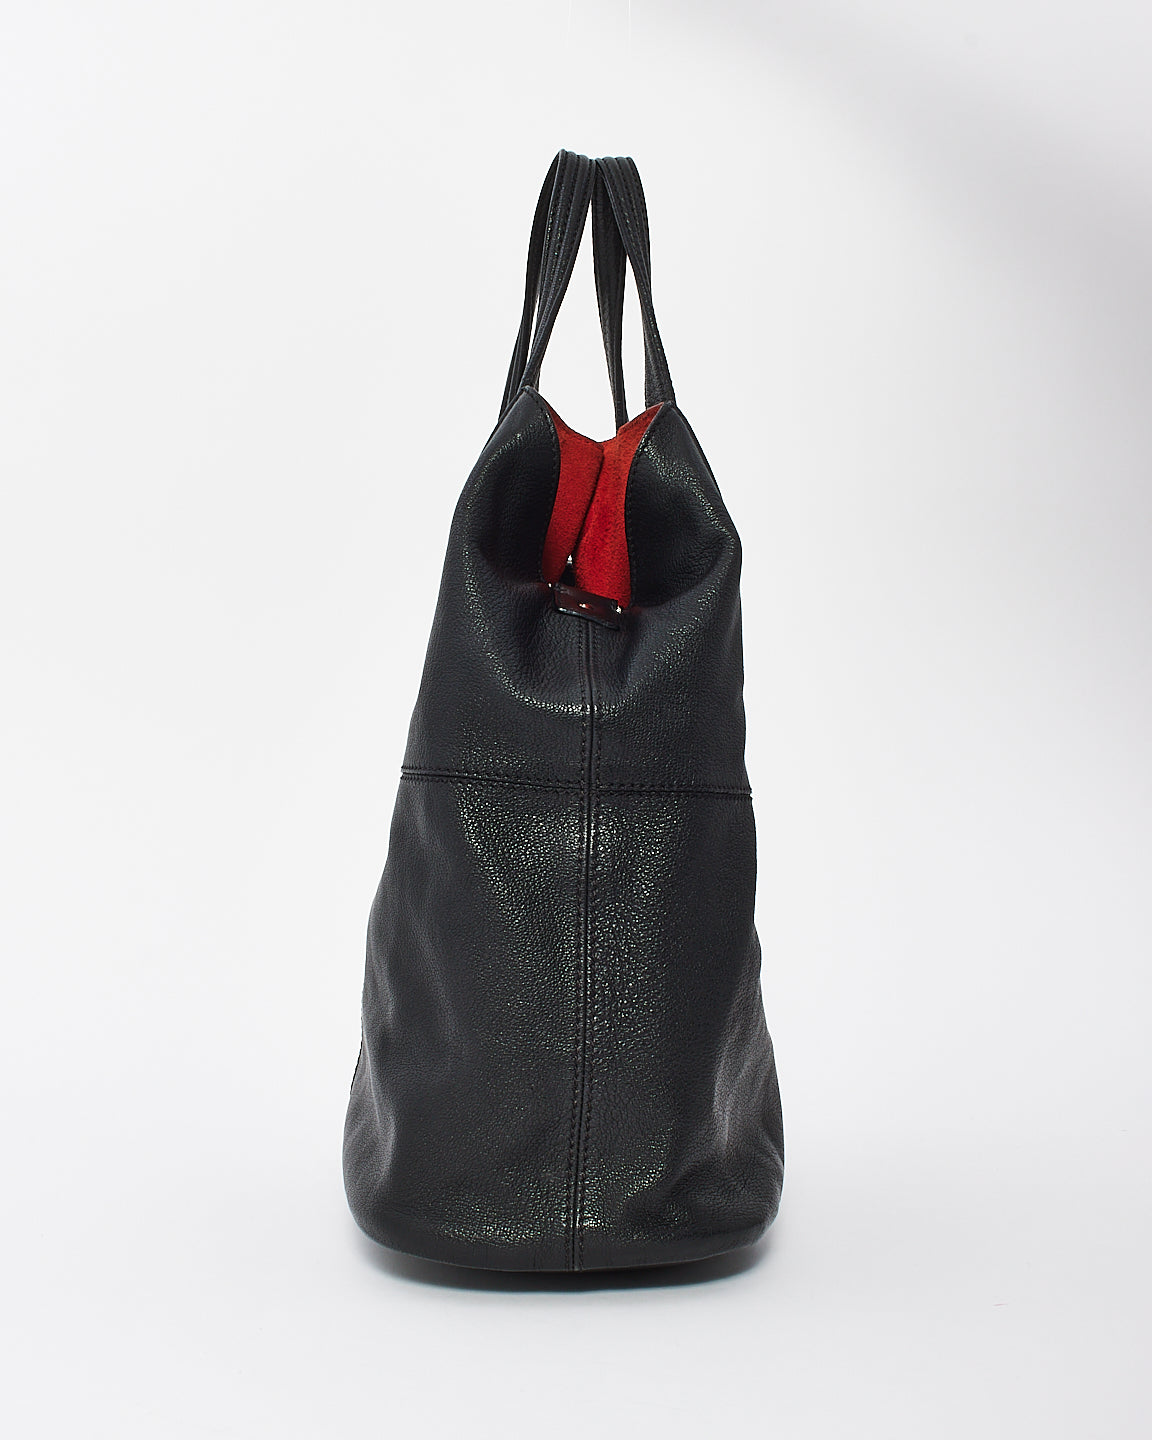 Givenchy Black Leather Nightingale North South Large Shoulder Bag